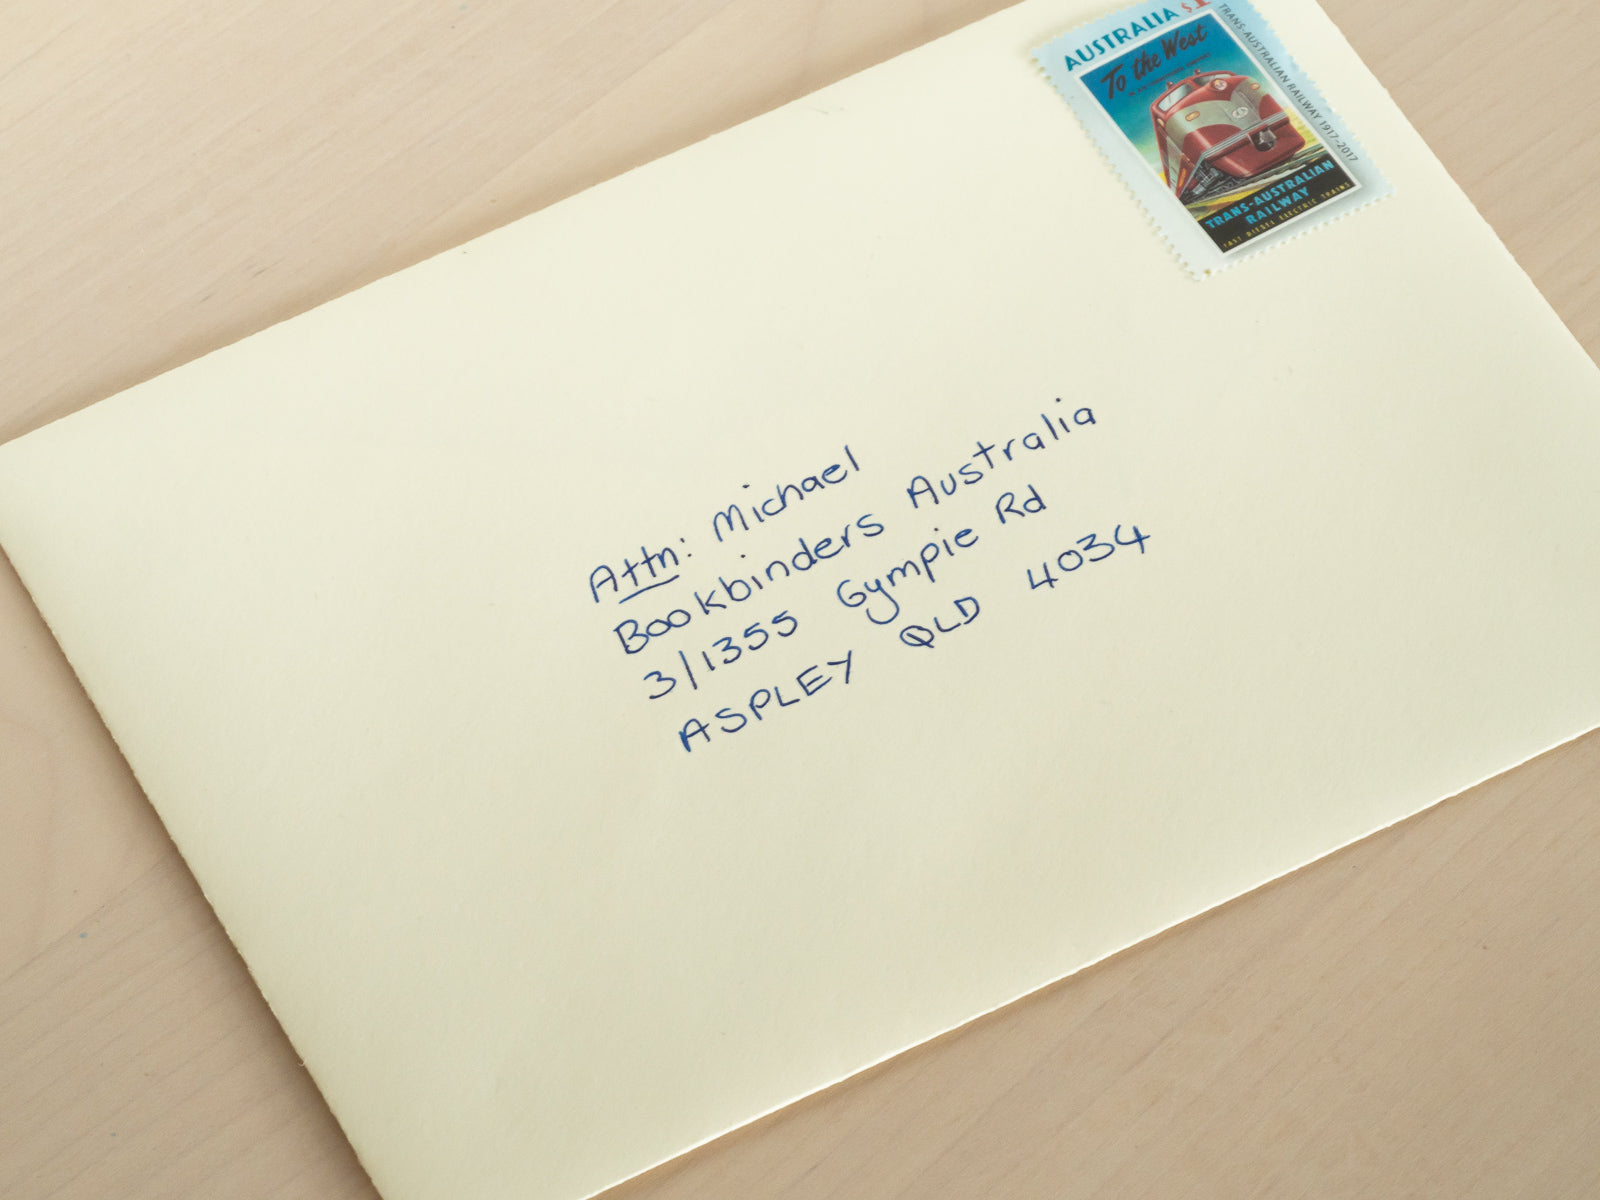 Address Envelope Attn - 5 Fah 1 H 430 Envelopes And Mailing ...